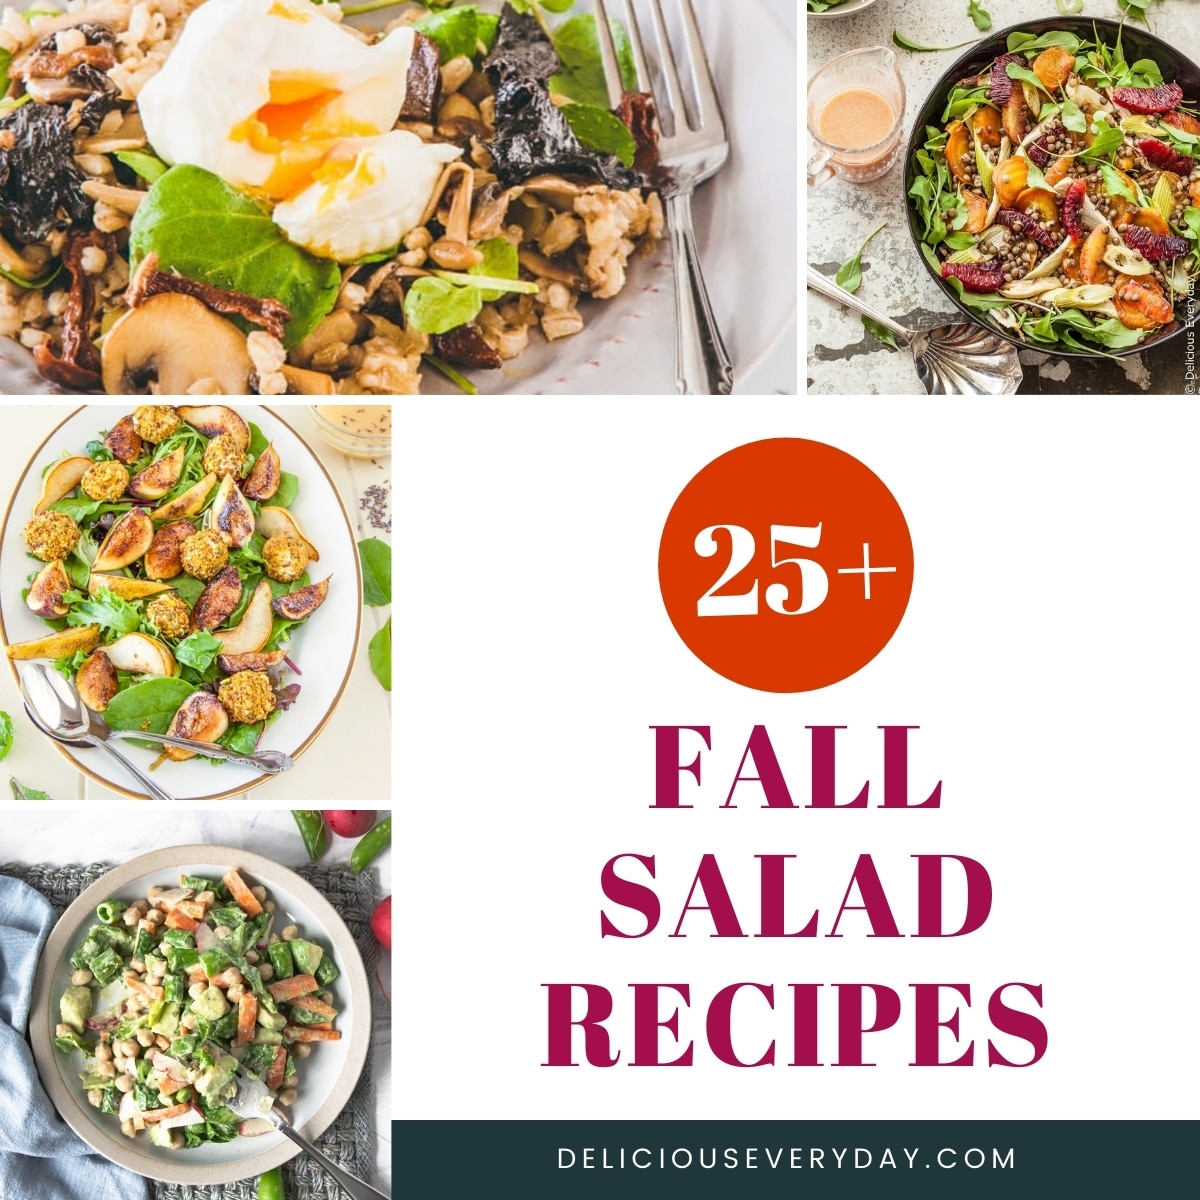 salad recipes perfect for the Fall season.